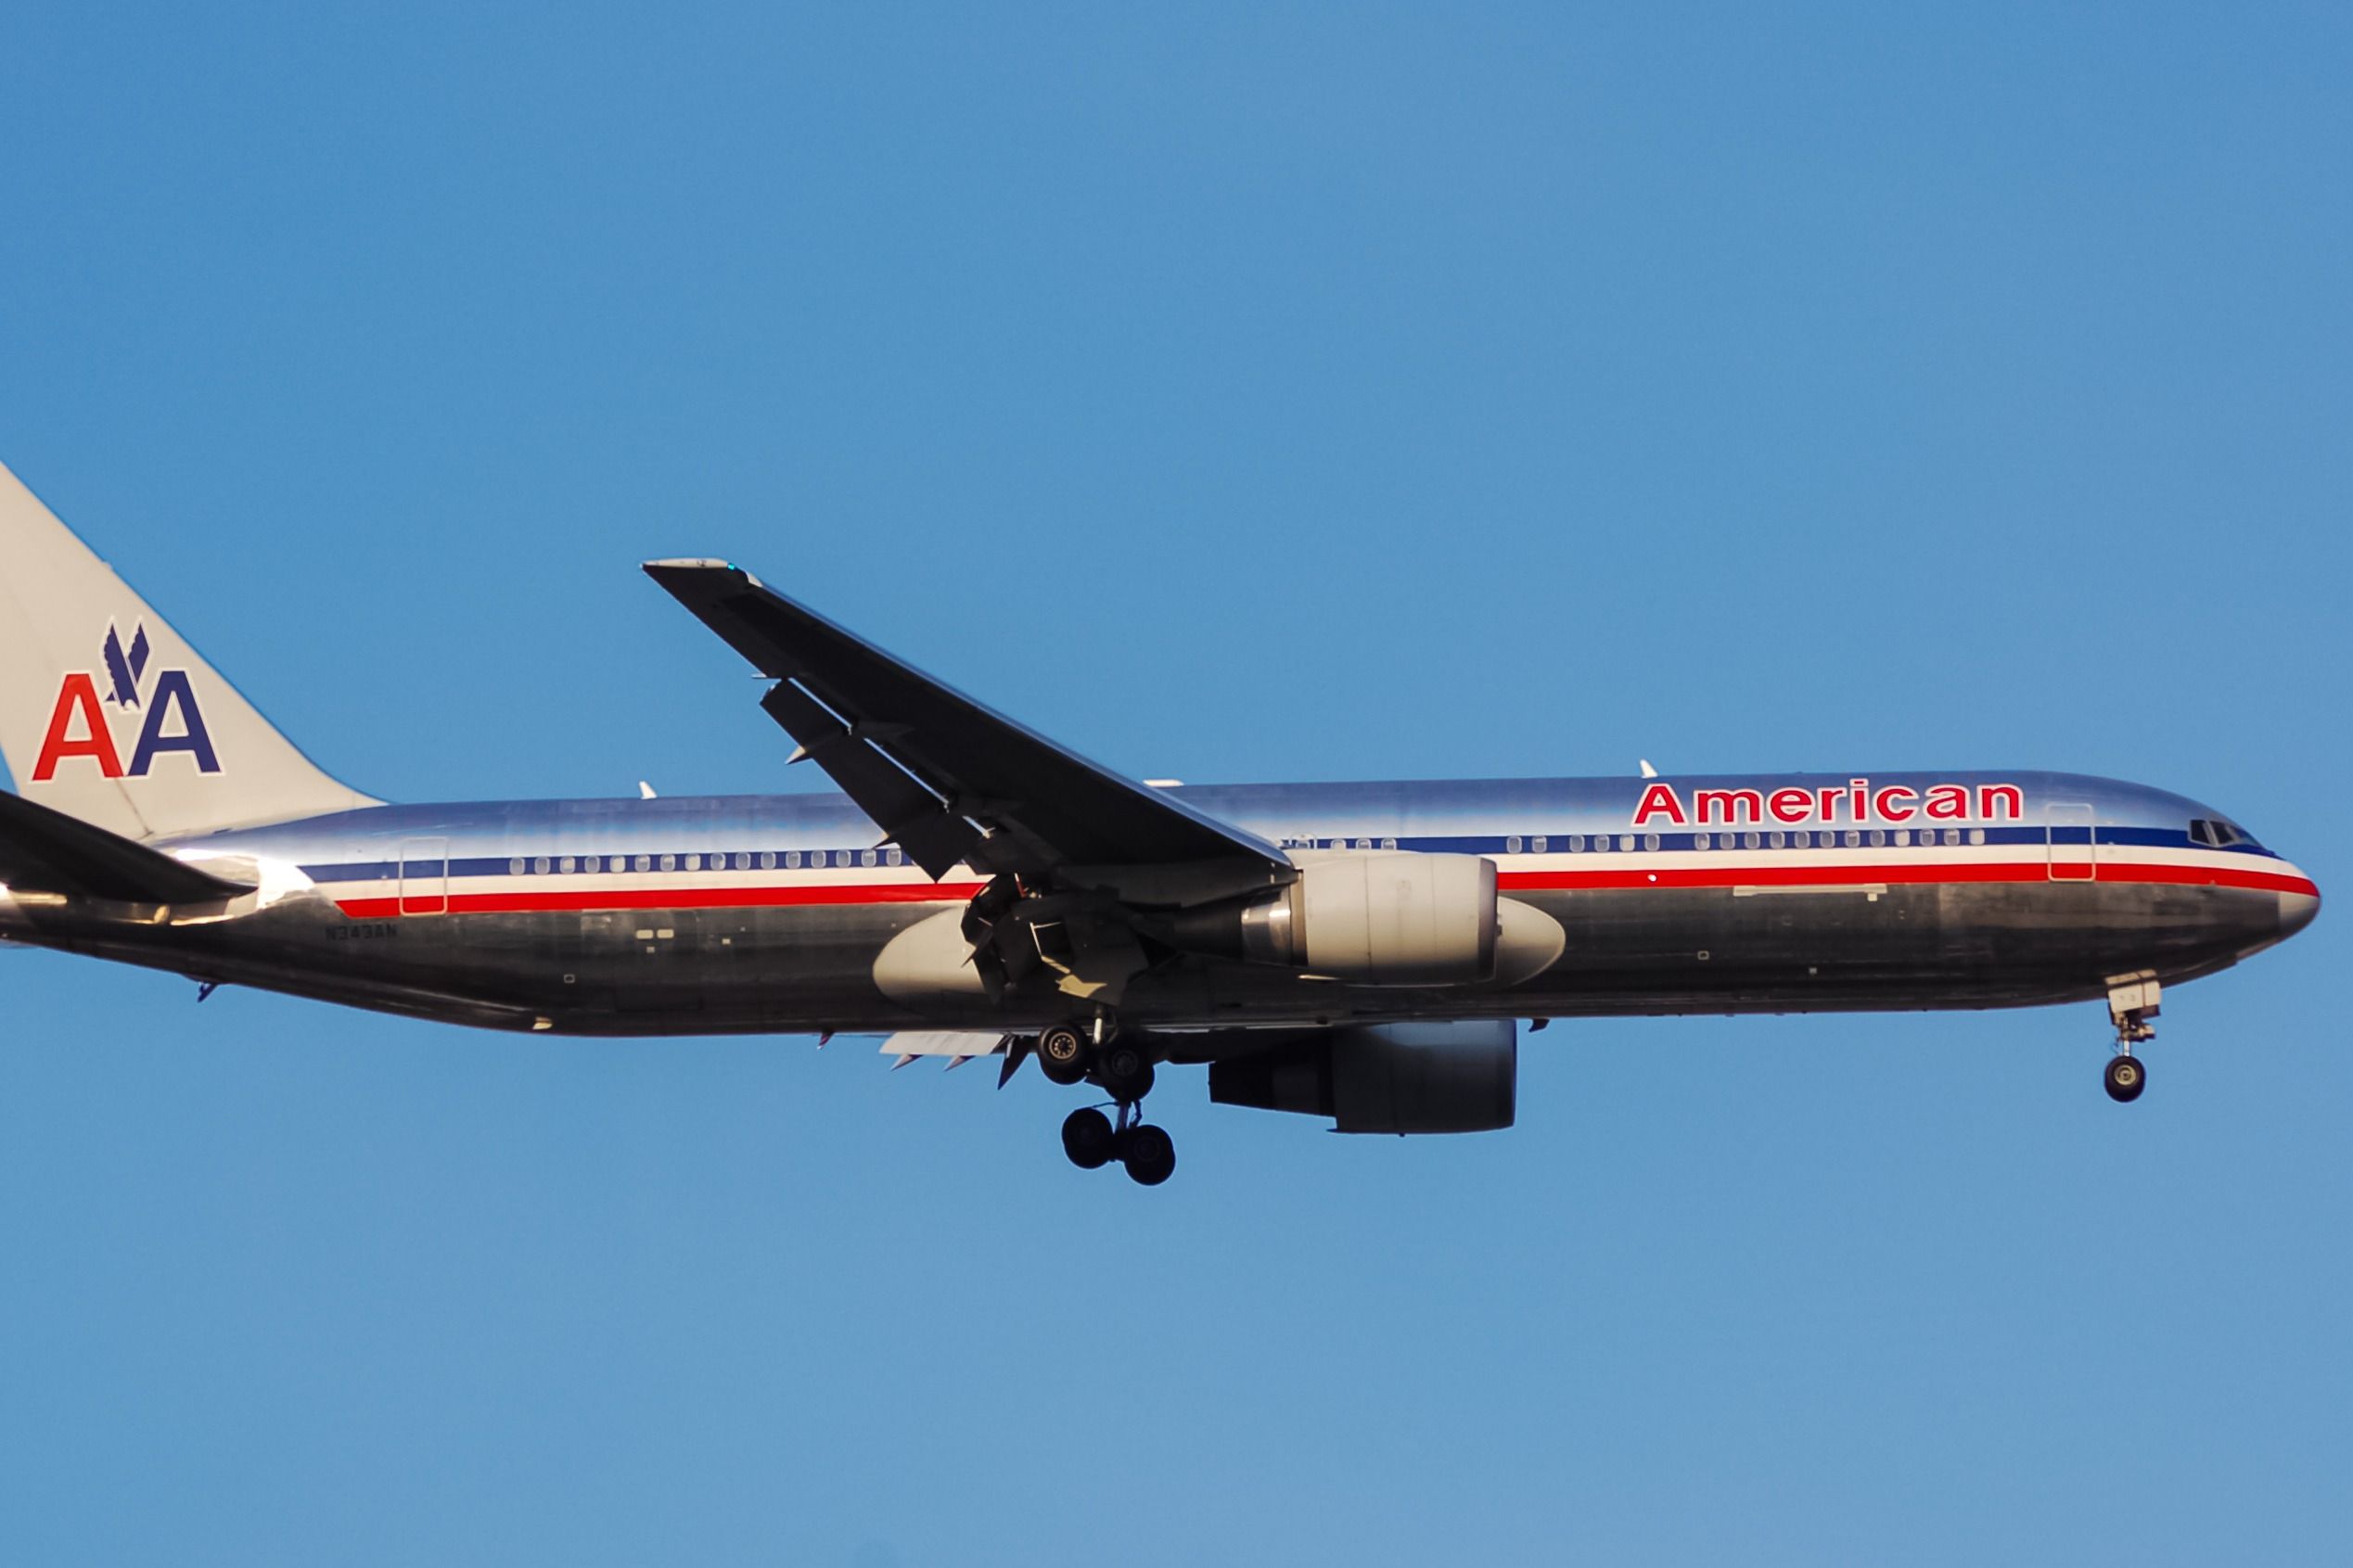 An American Airlines 767-300ER landing